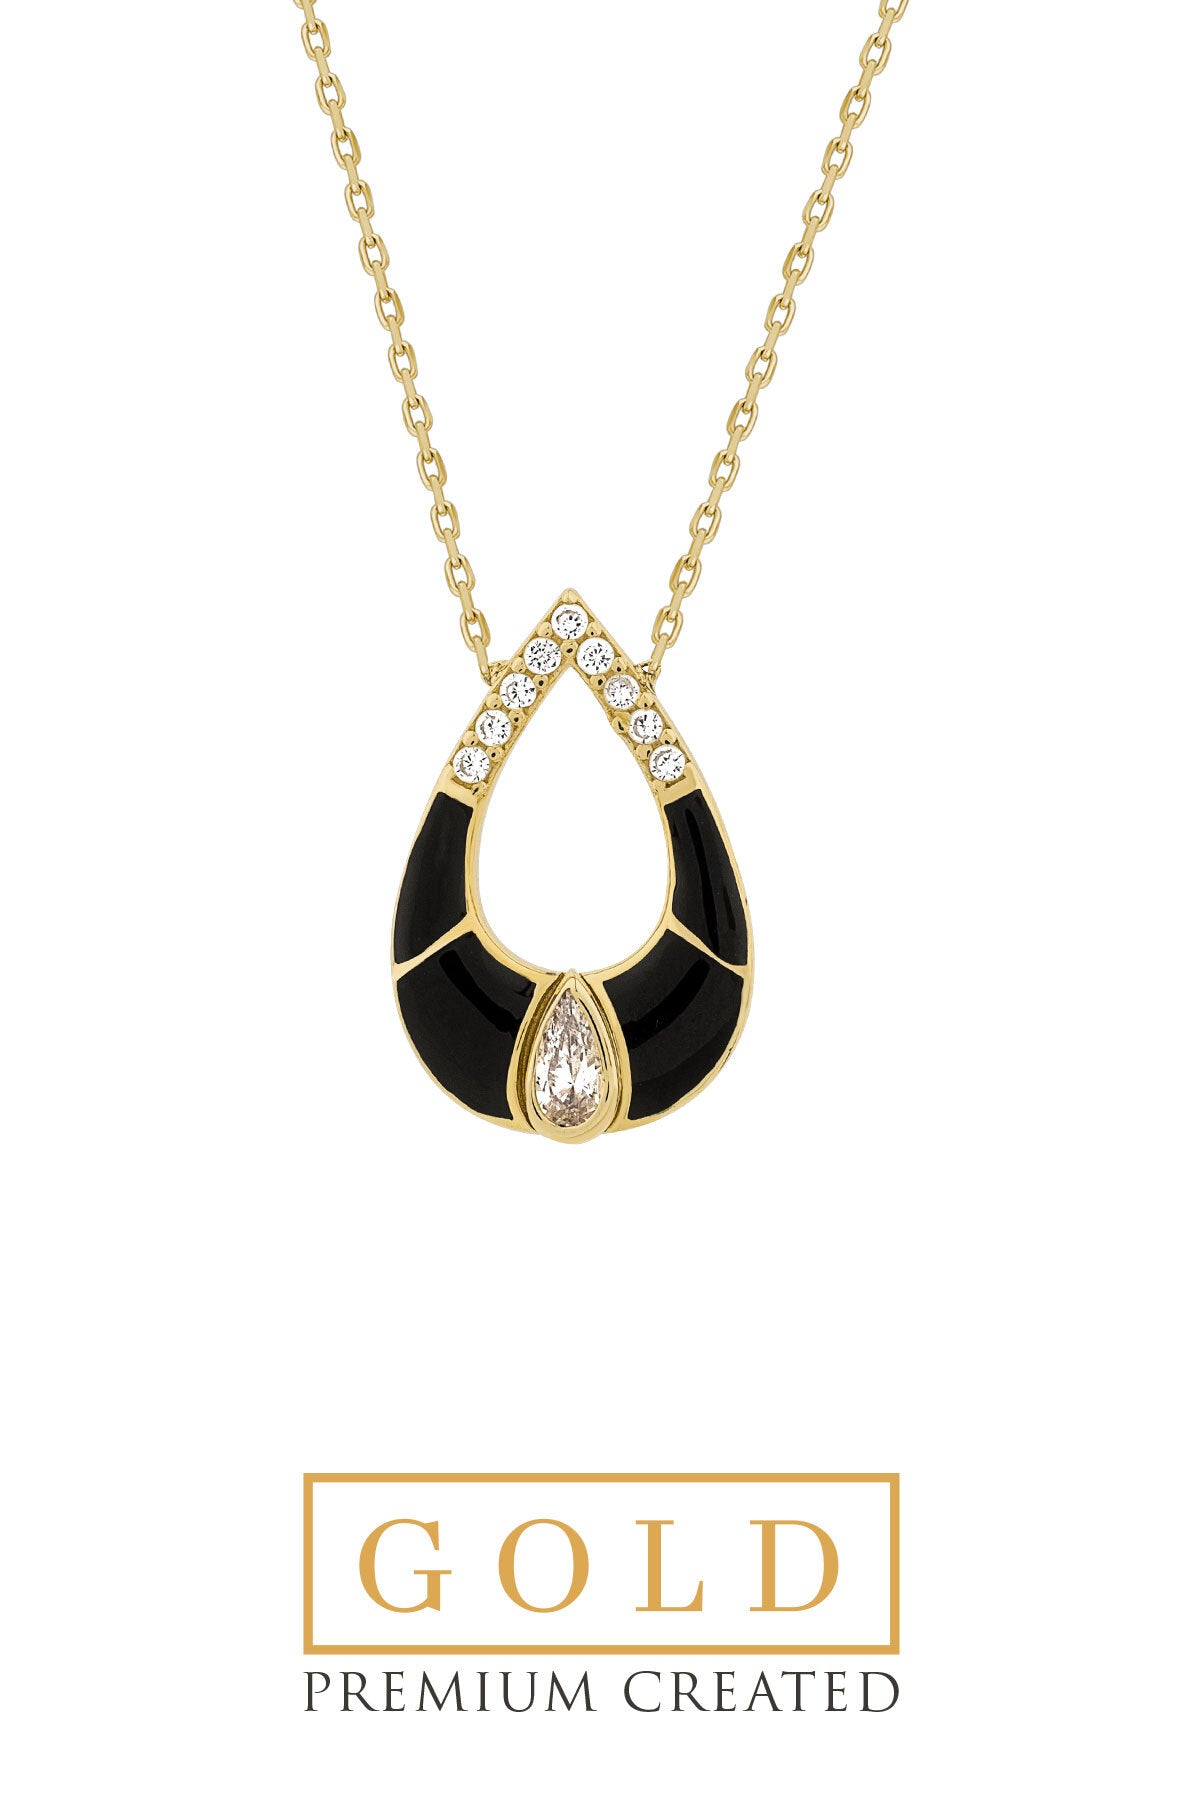 14 K Gold Certified Premium Created Stone Enamel Drop Necklace 42 Cm